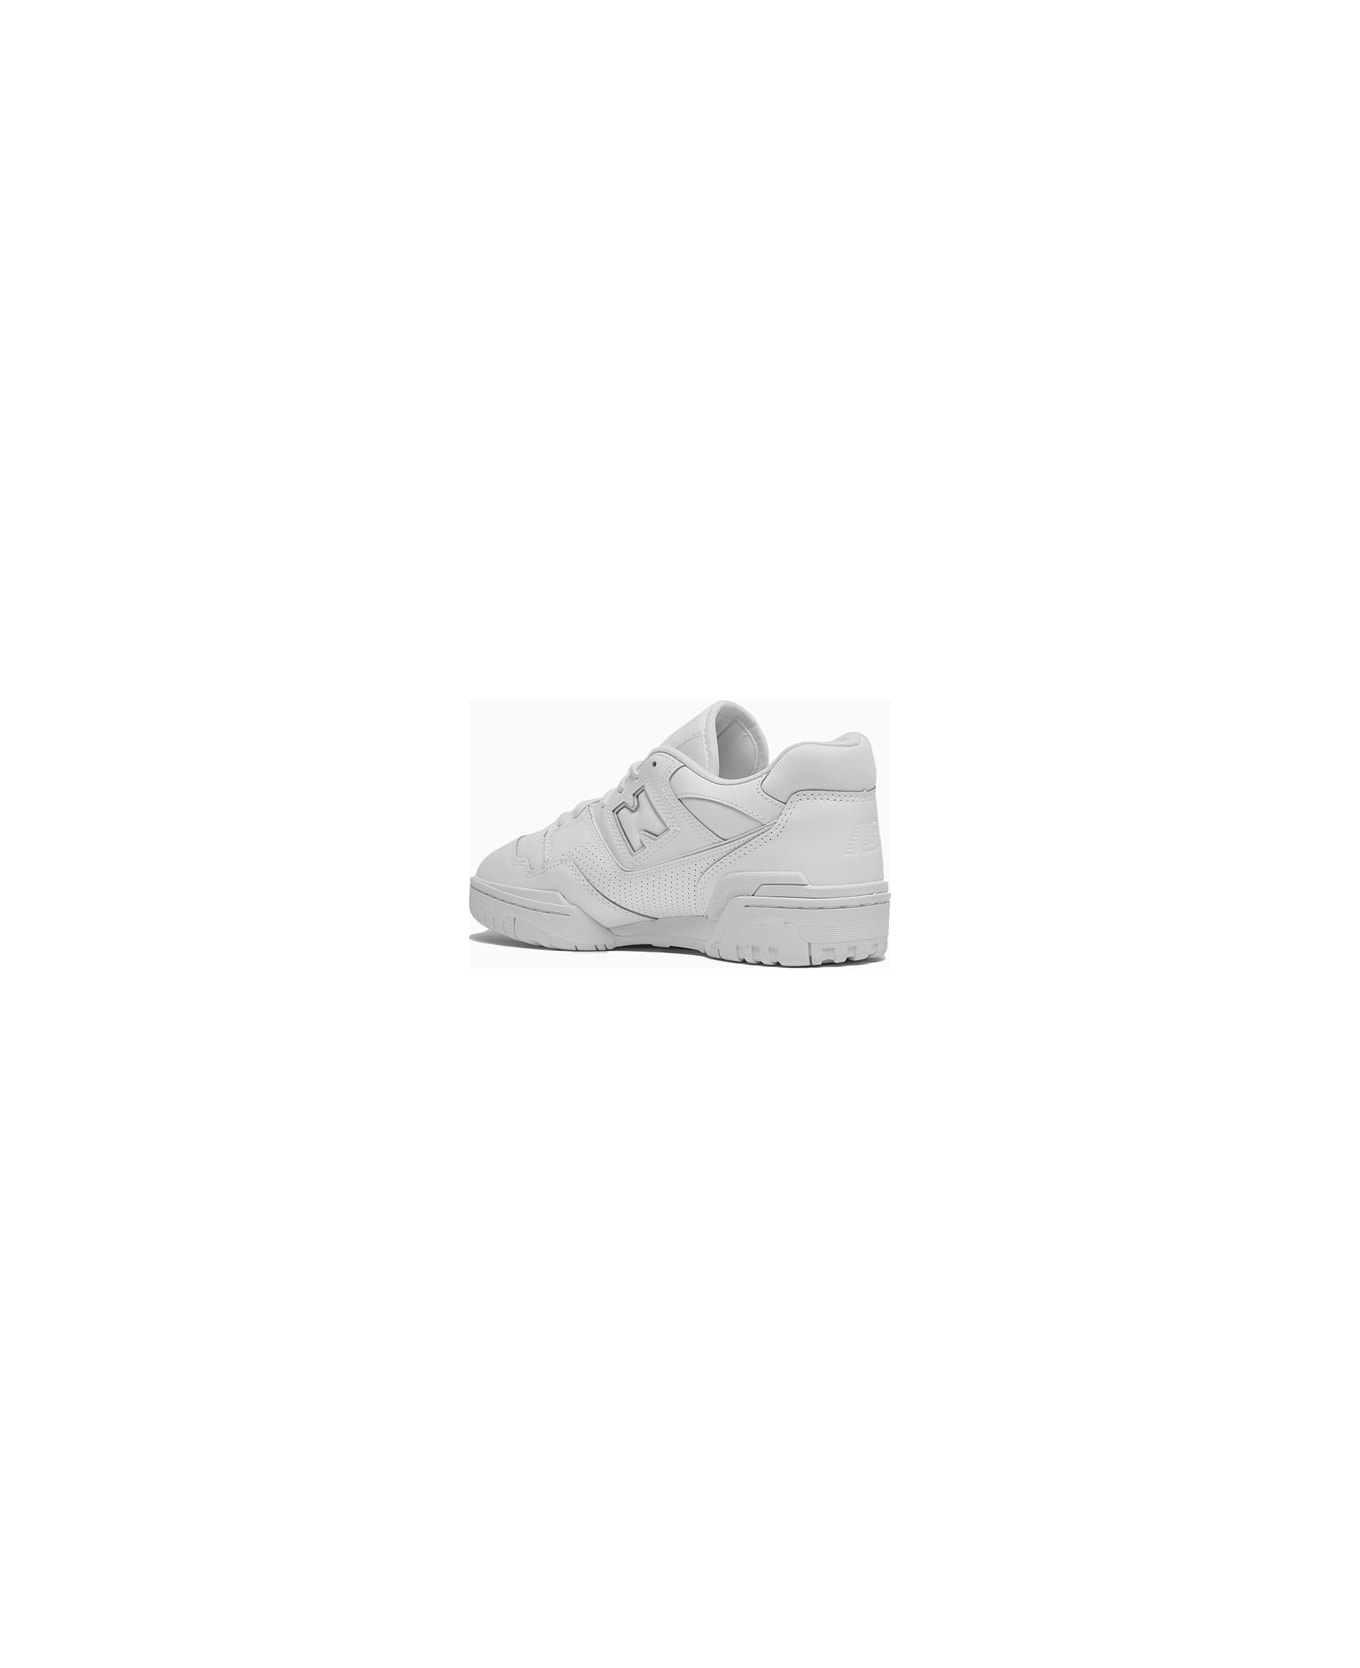 New Balance Sneakers Gsb550ww Gs - WHITE シューズ